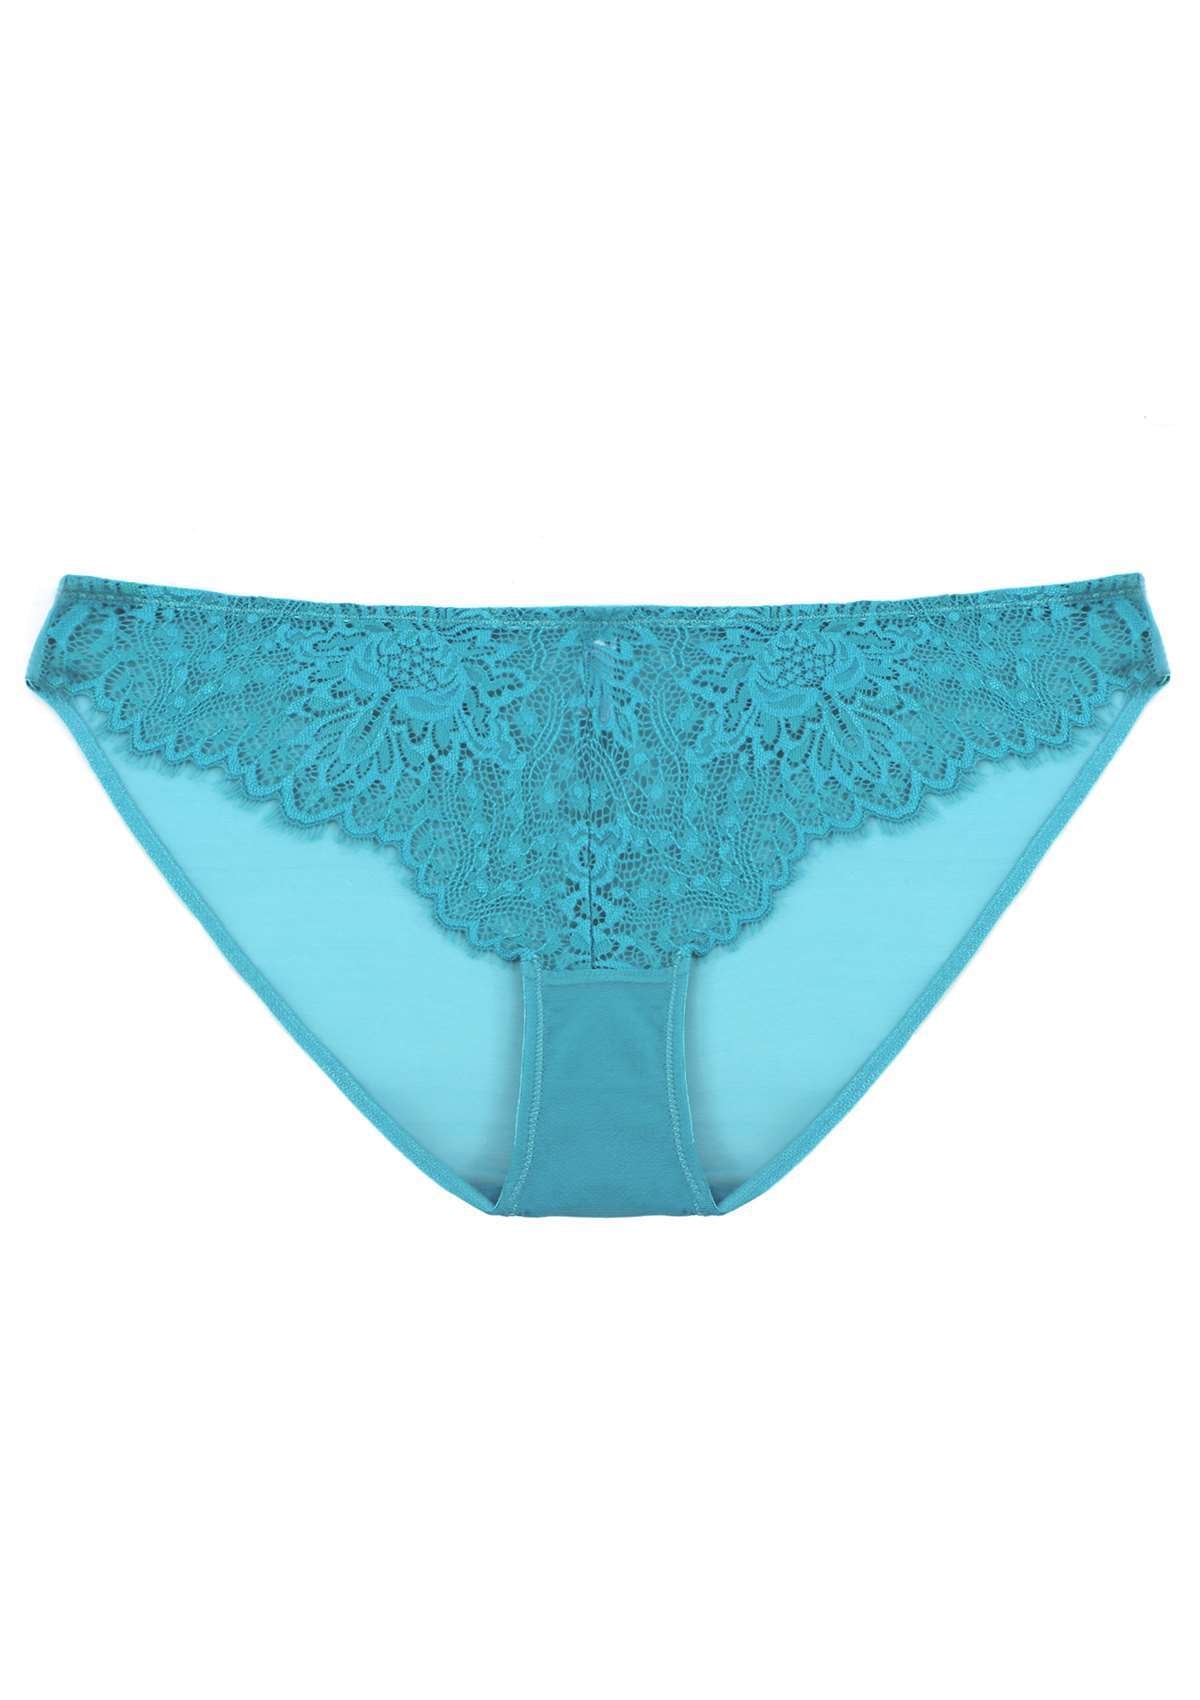 HSIA Sunflower Exquisite Horizon Blue Lace Bikini Underwear - M / High-Rise Brief / Horizon Blue